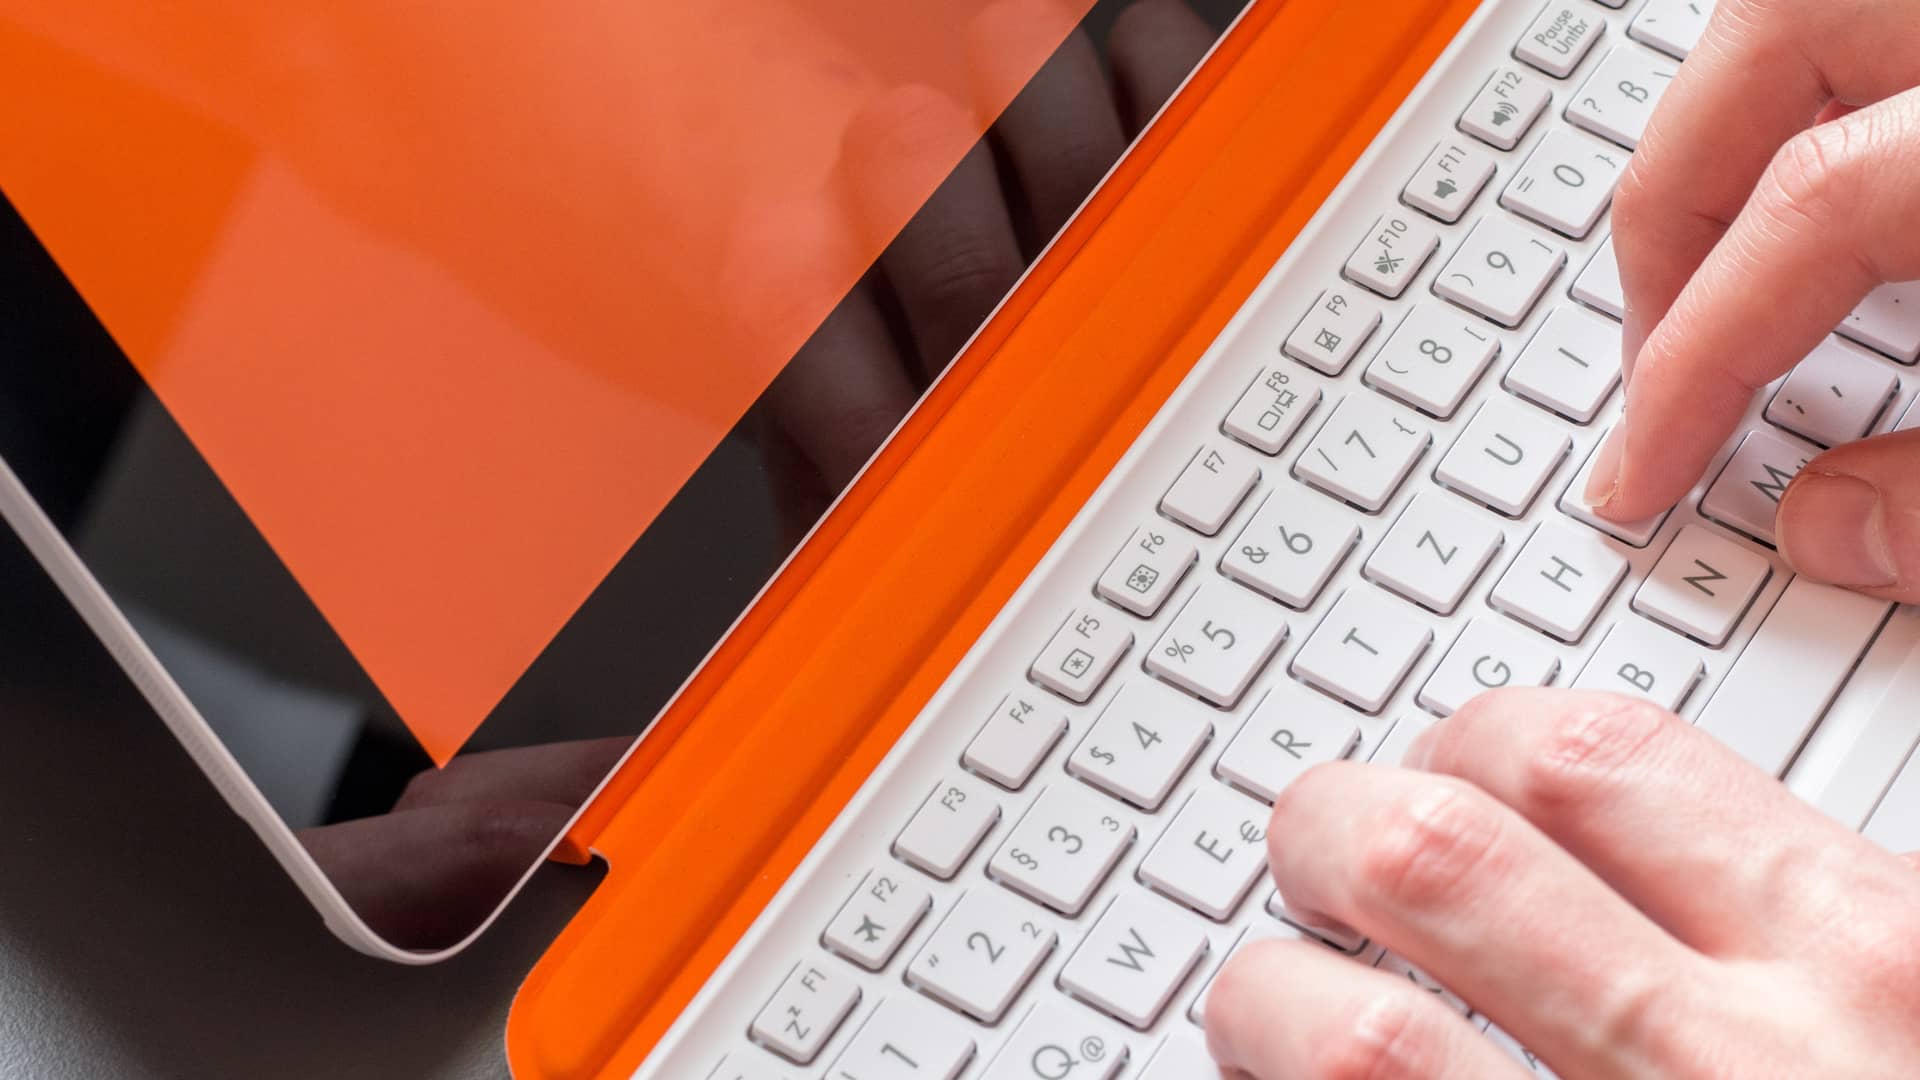 Manos usando laptop con internet adsl de orange